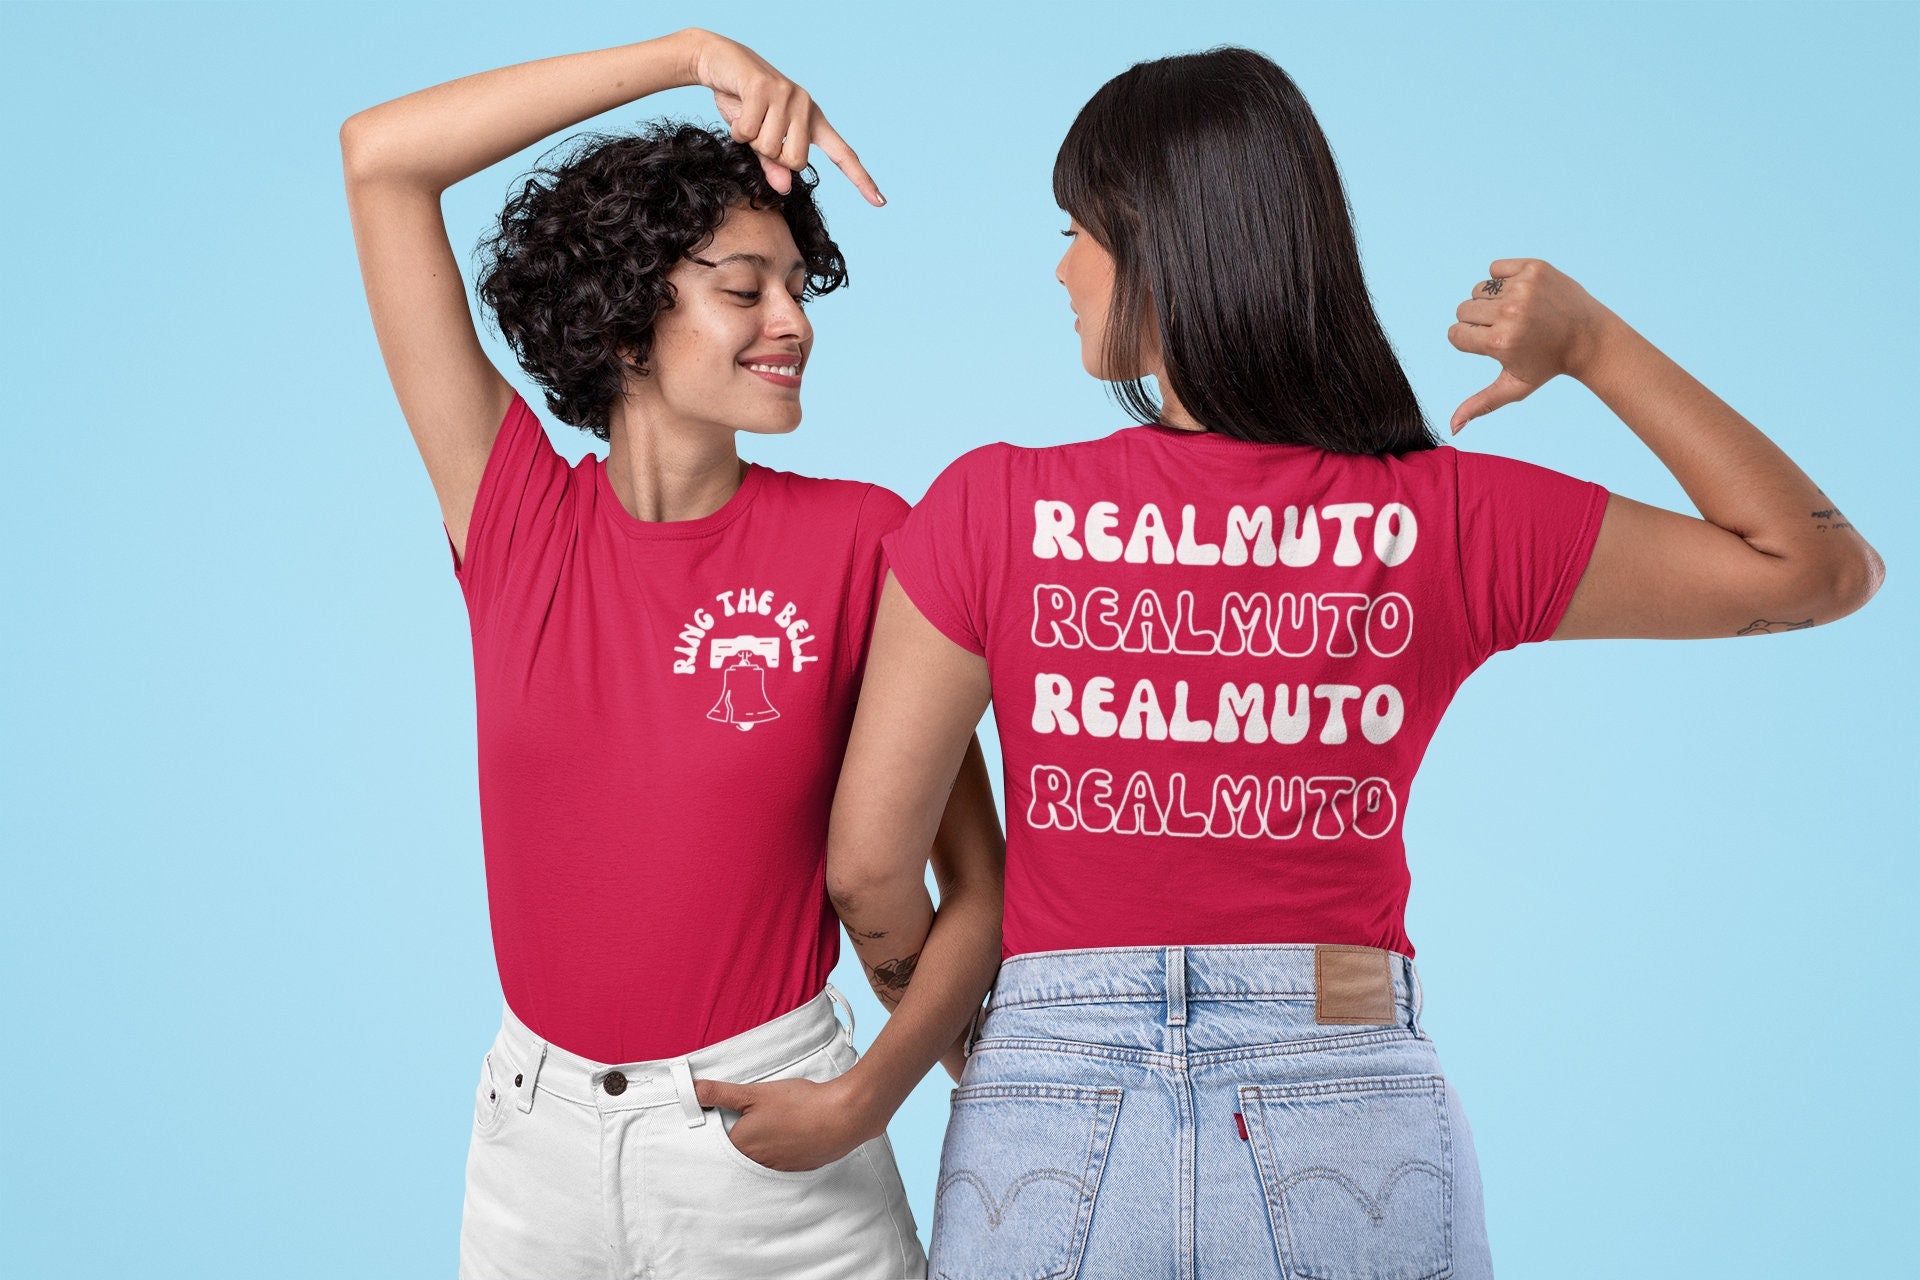 Phillies JT Realmuto bcib Dictionary T-shirt 